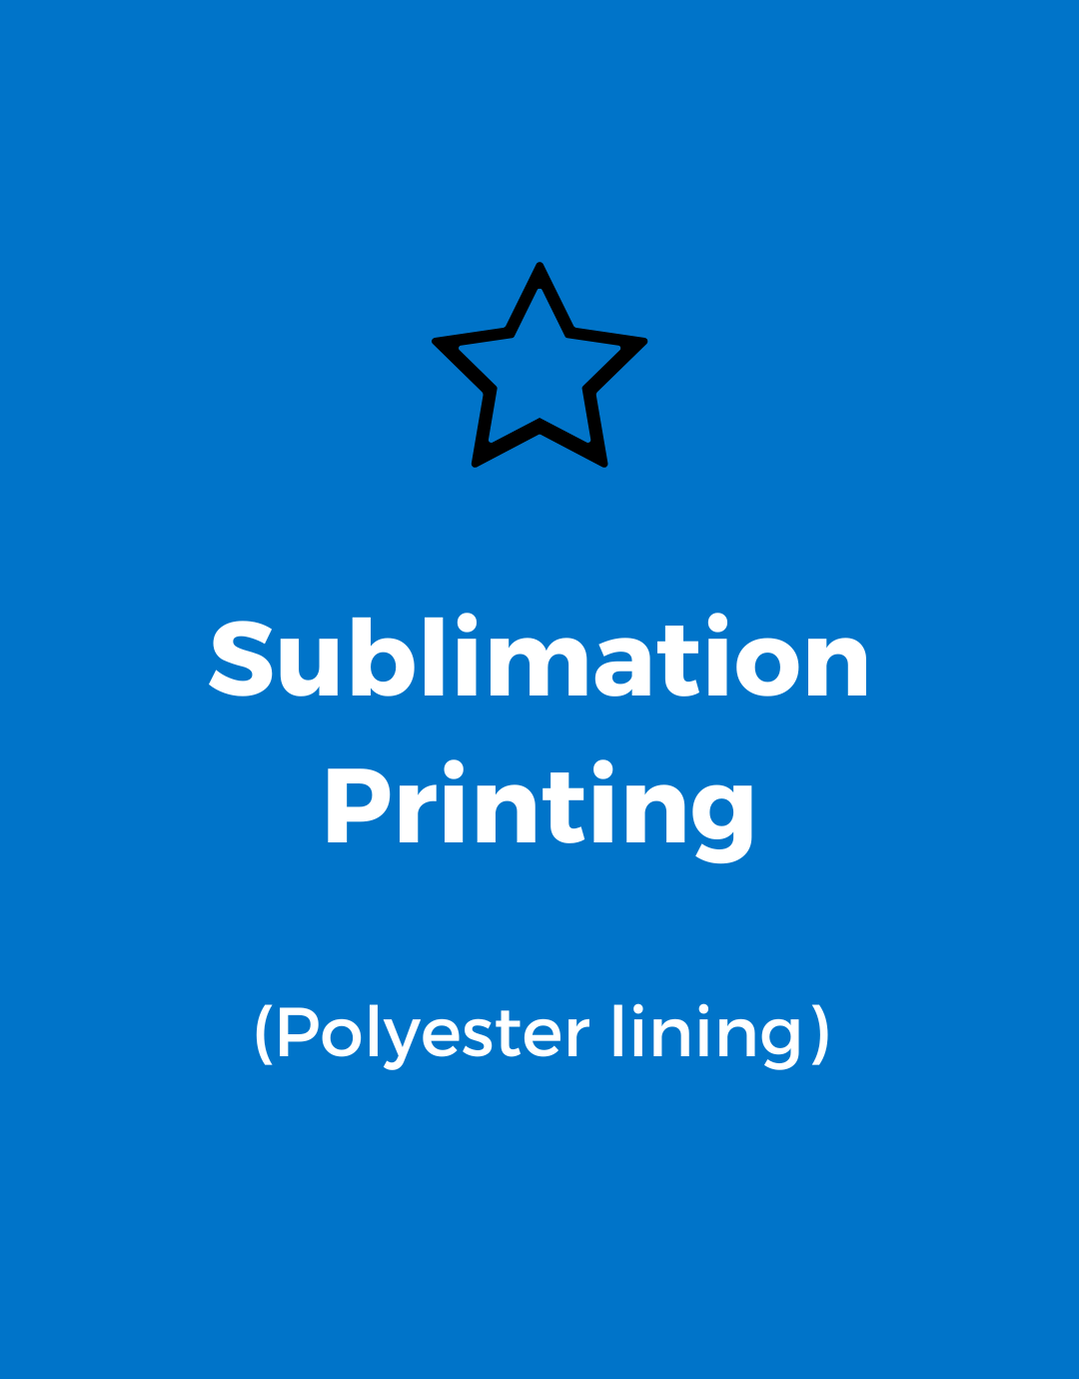 Sublimation printing